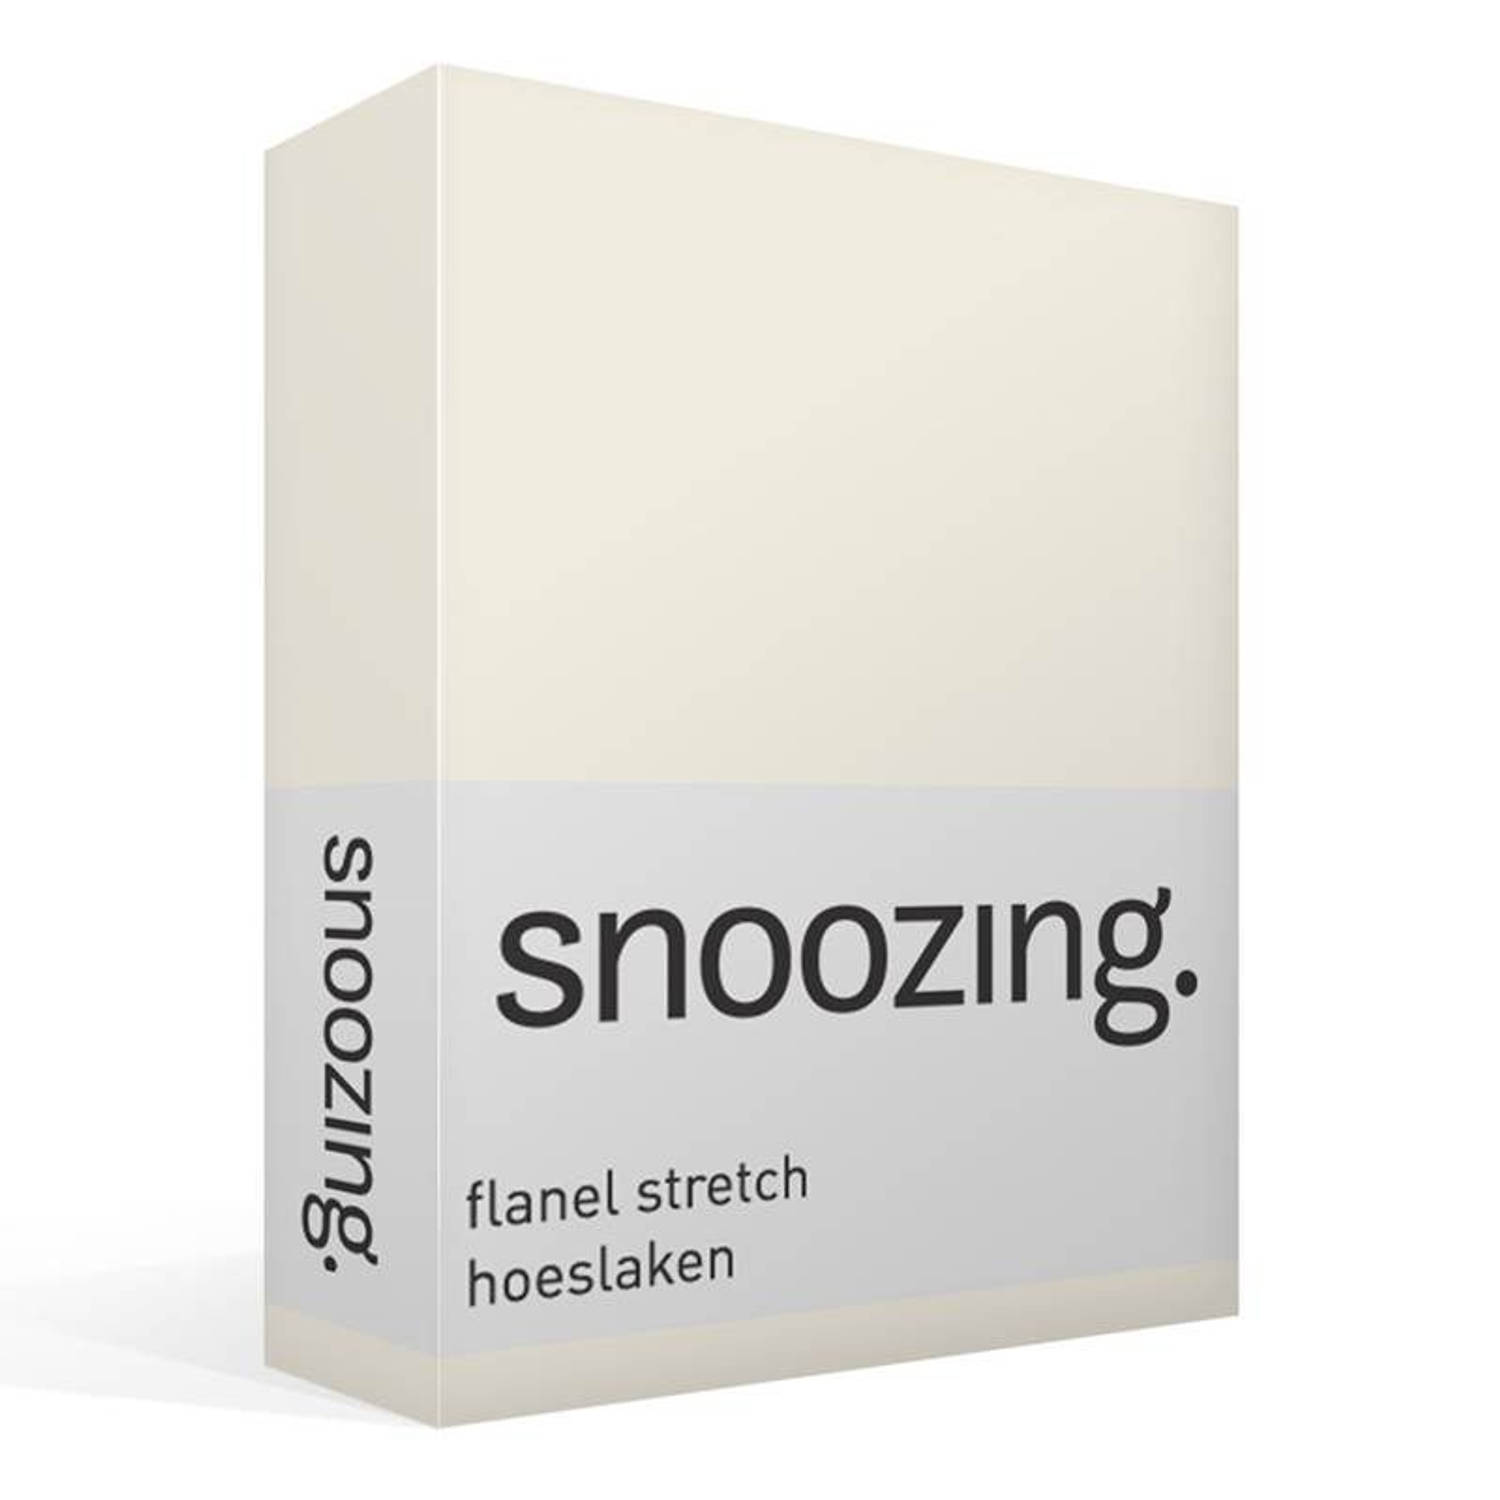 Snoozing stretch flanel hoeslaken - Tweepersoons - Ivoor